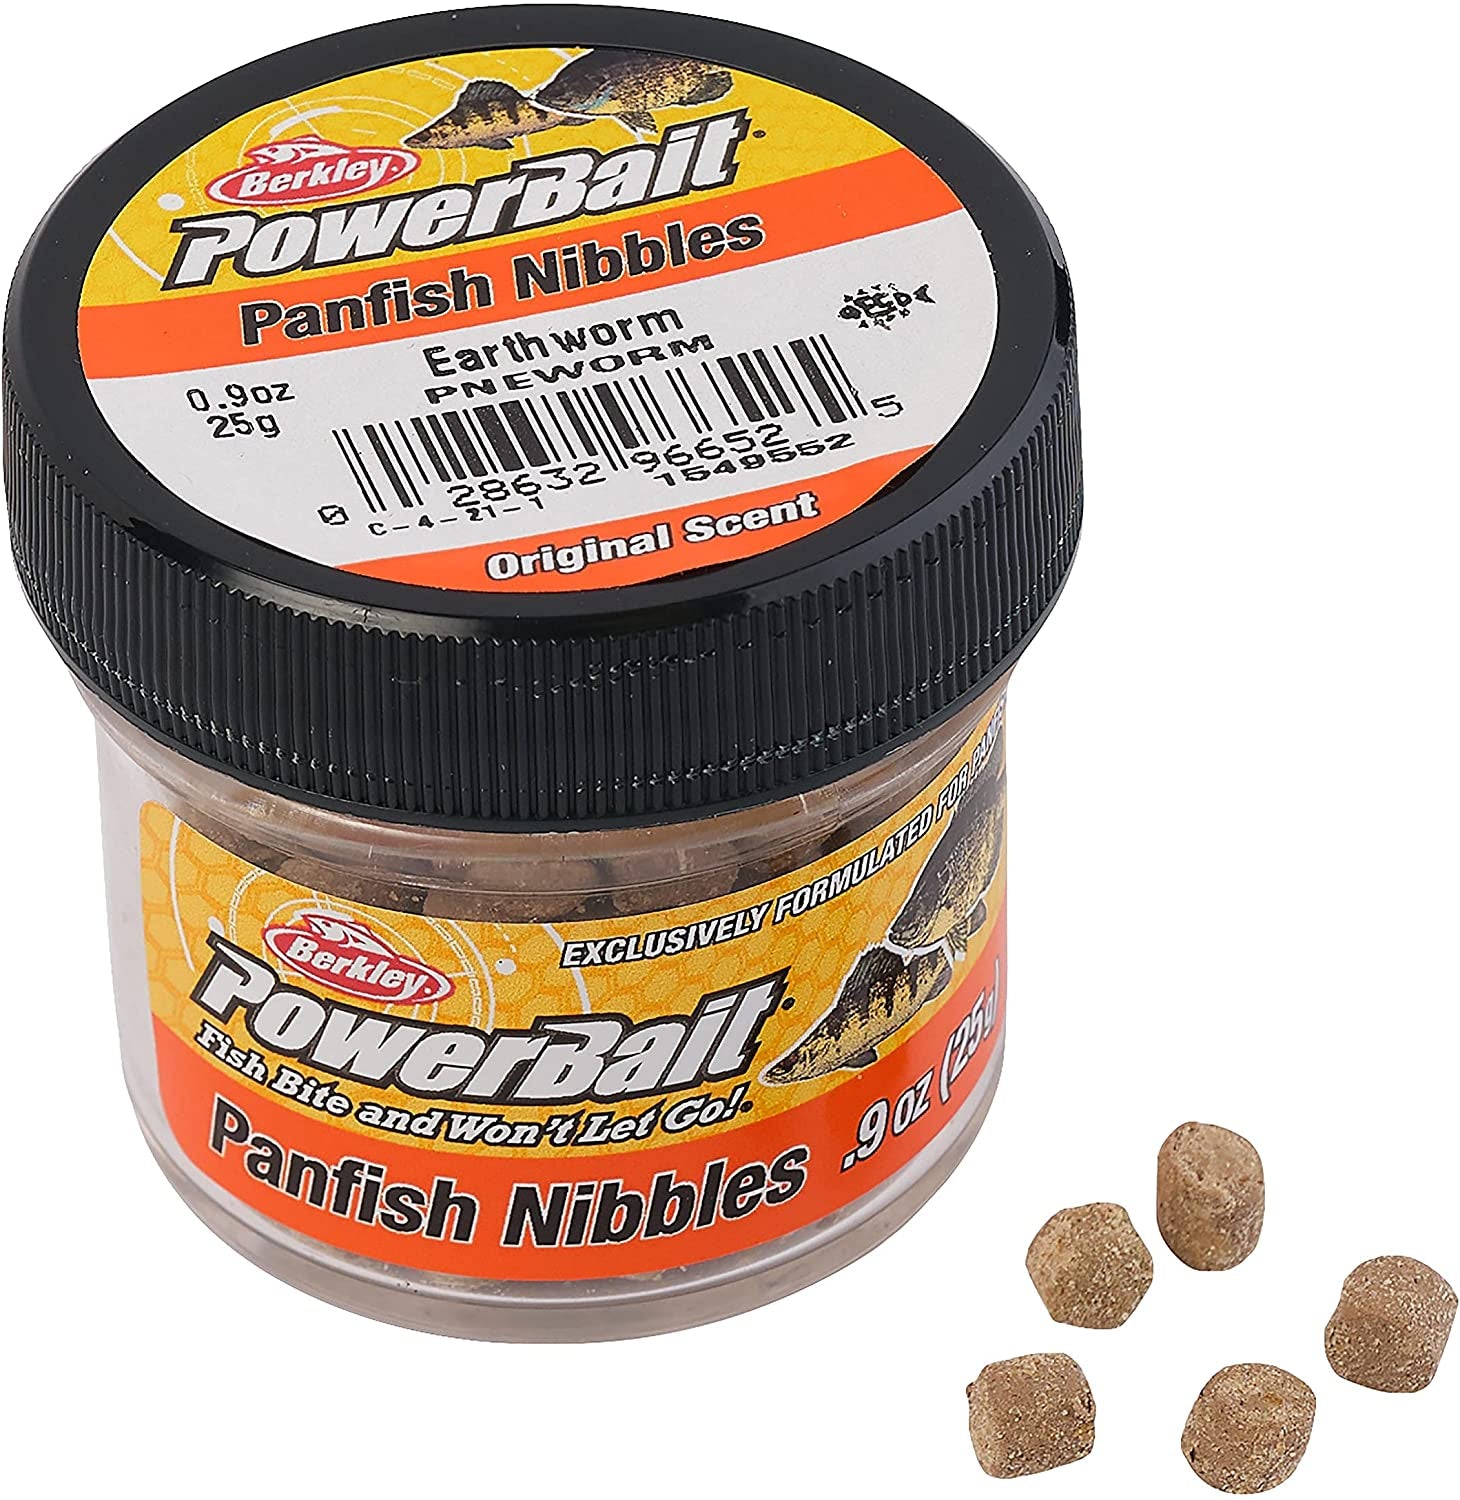 Powerbait Panfish Nibbles Fishing Soft Bait, Earthworm, Small Jar